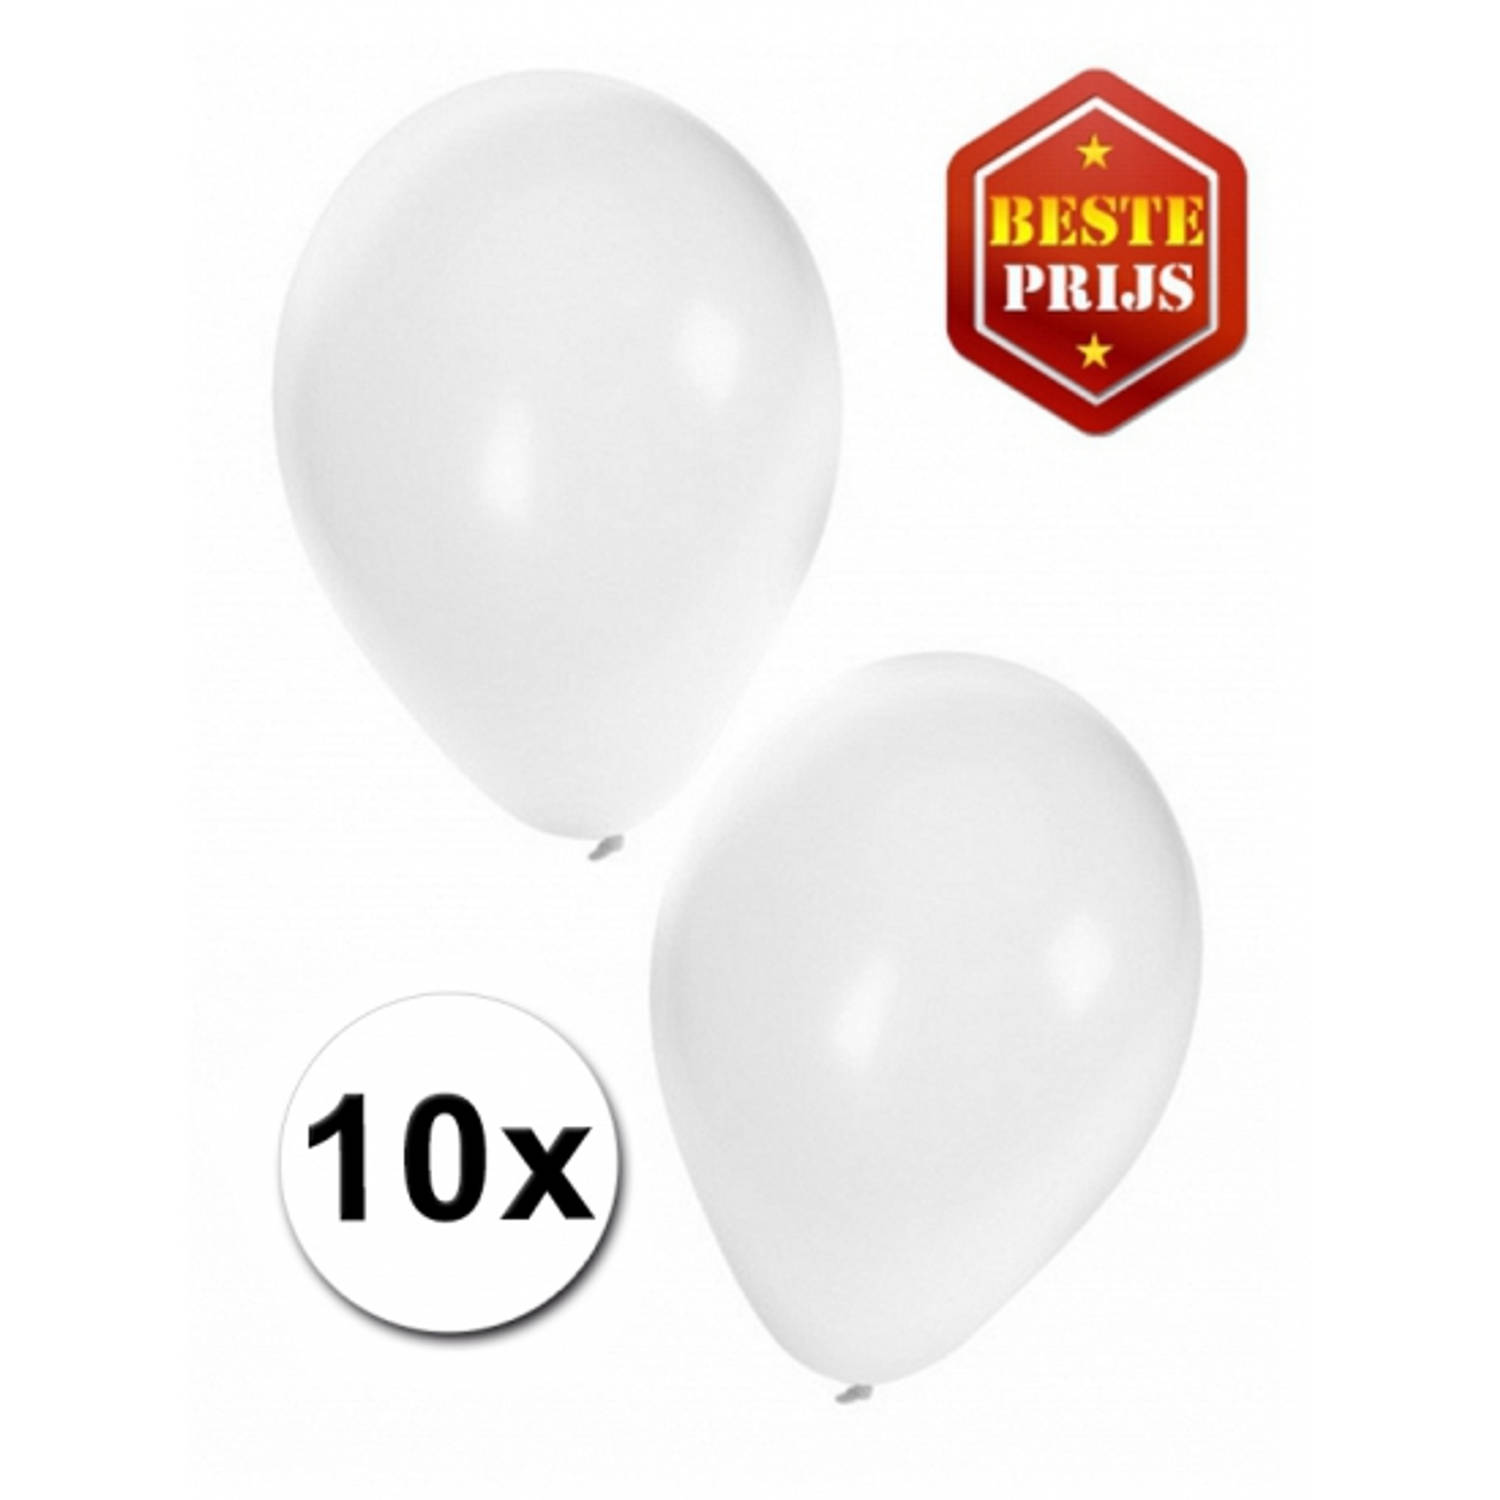 Voordelige ballonnen 30x - Ballonnen | Blokker